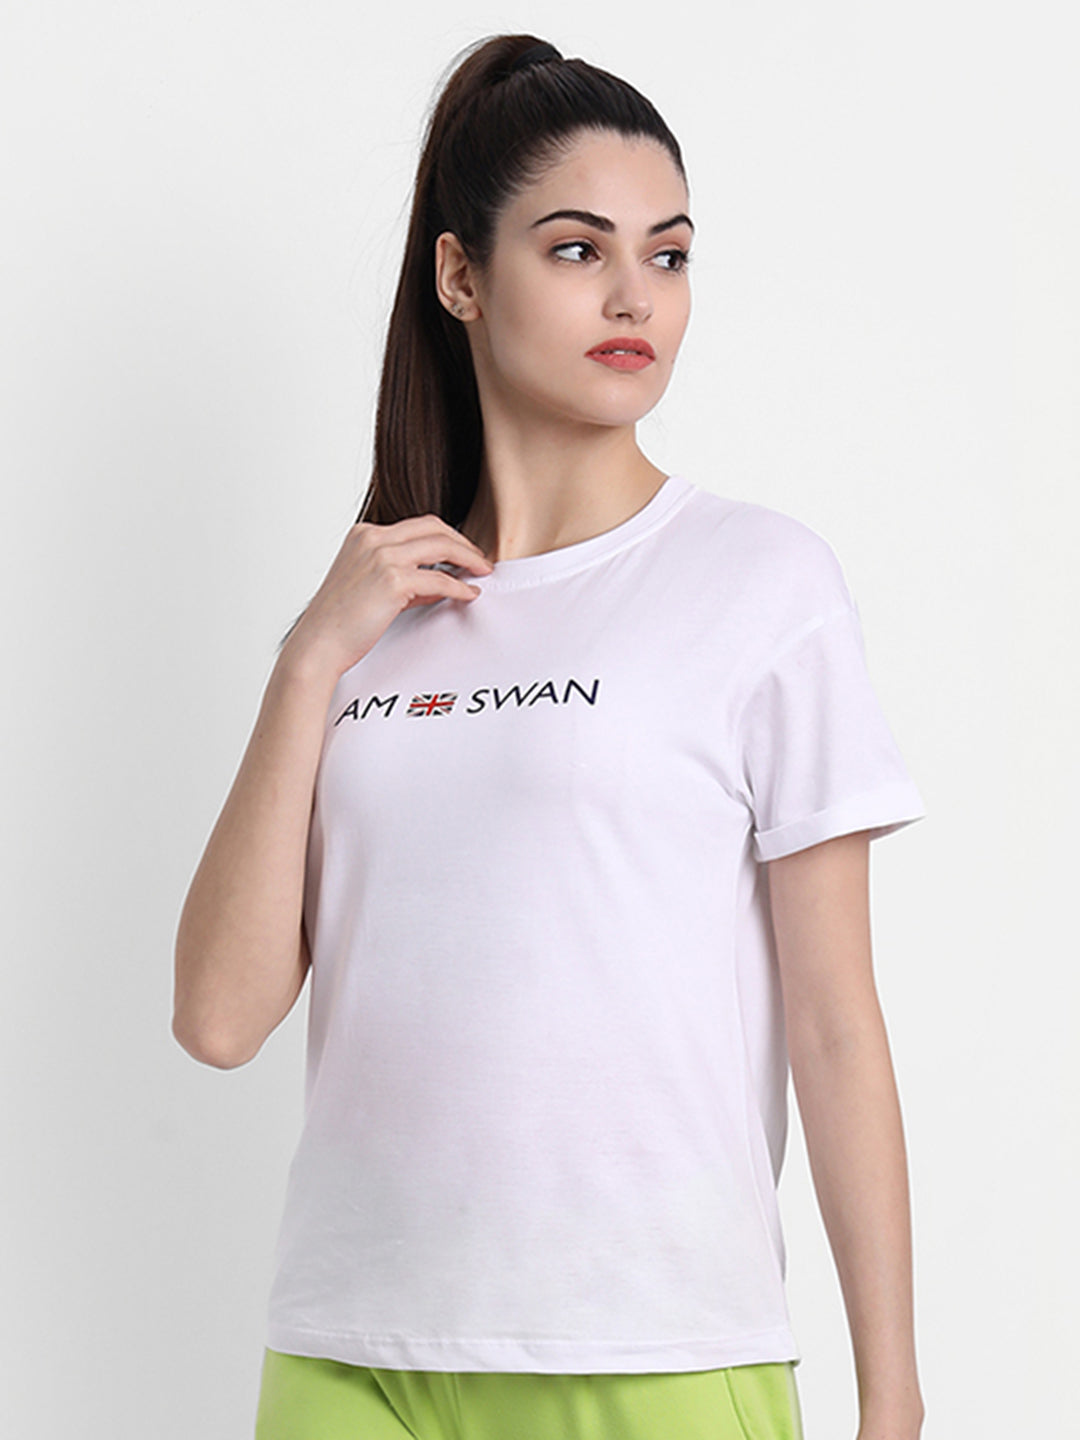 Women's Half Sleeve T-Shirts in Premium Cotton Fabric